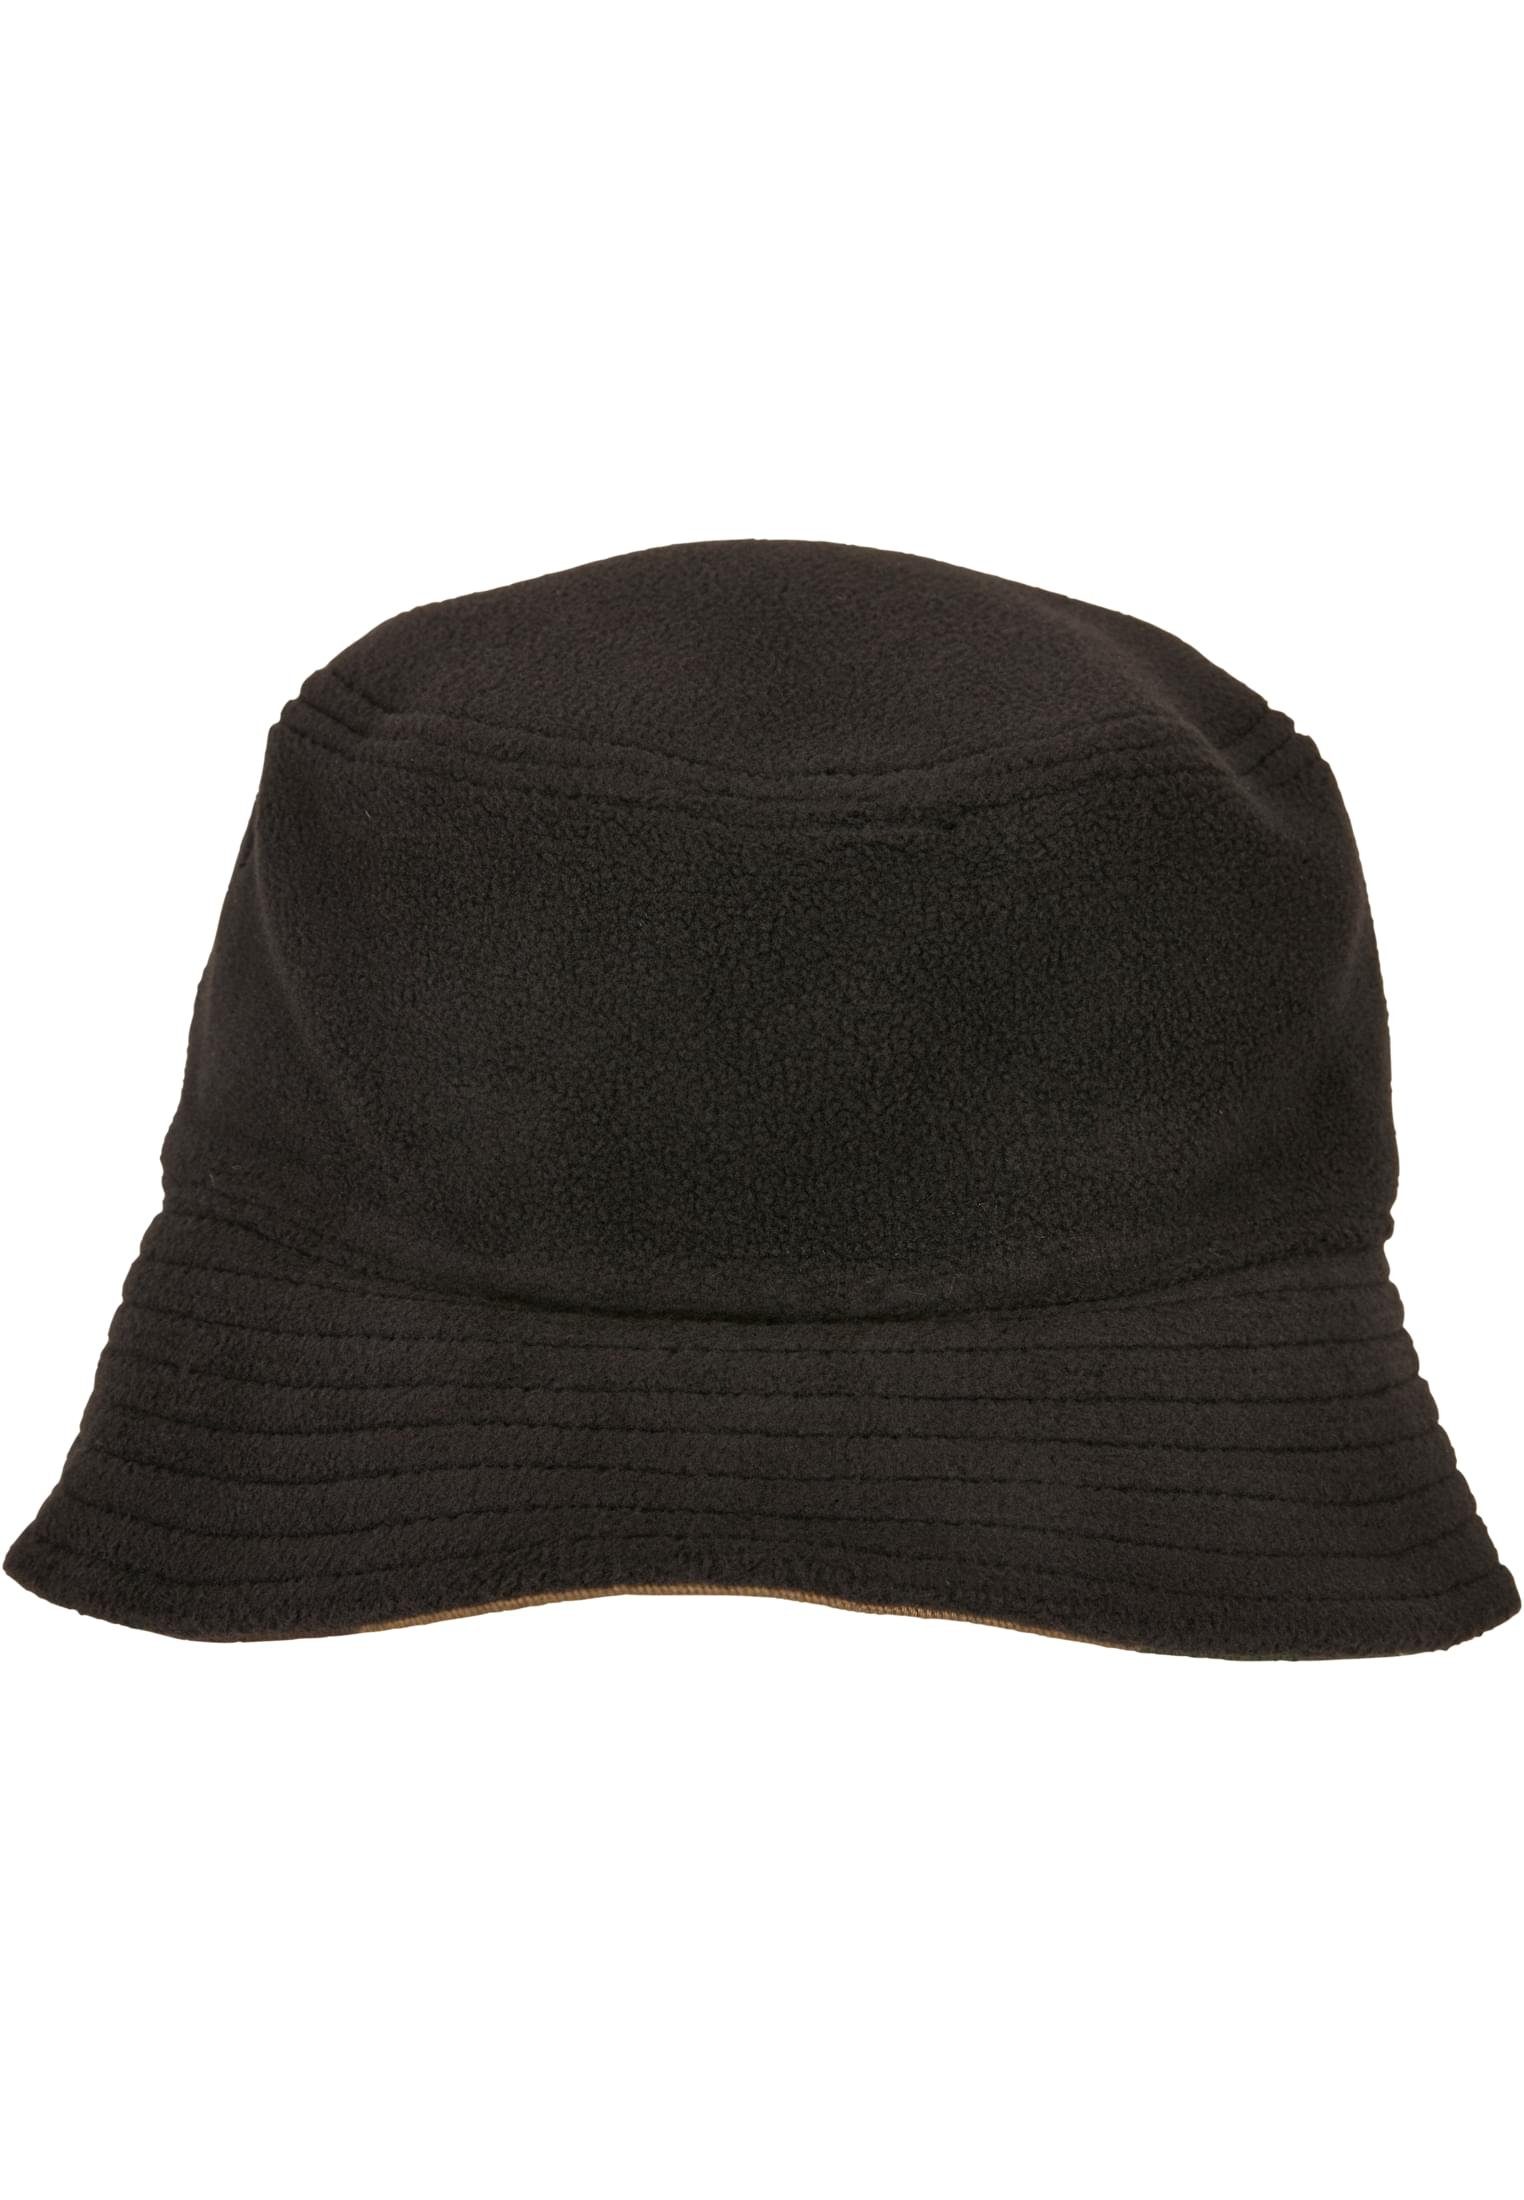 Hustle CAYLER Flex Hat Accessoires Knock SONS Cap & the Bucket